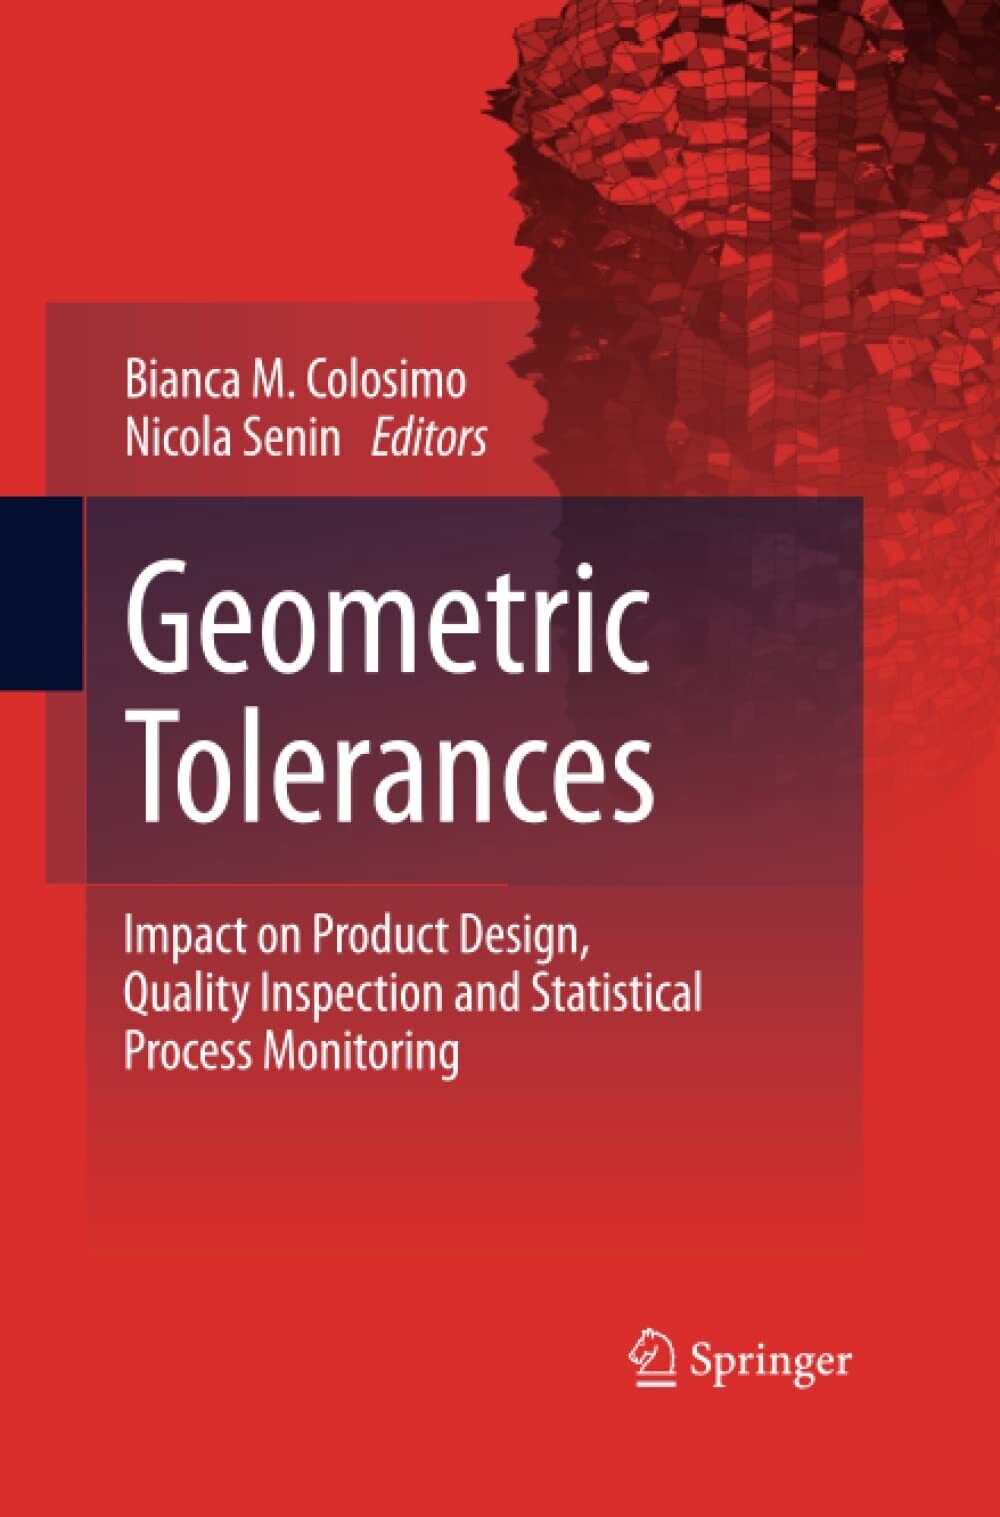 Geometric Tolerances -  Bianca M. Colosimo - Springer, 2016